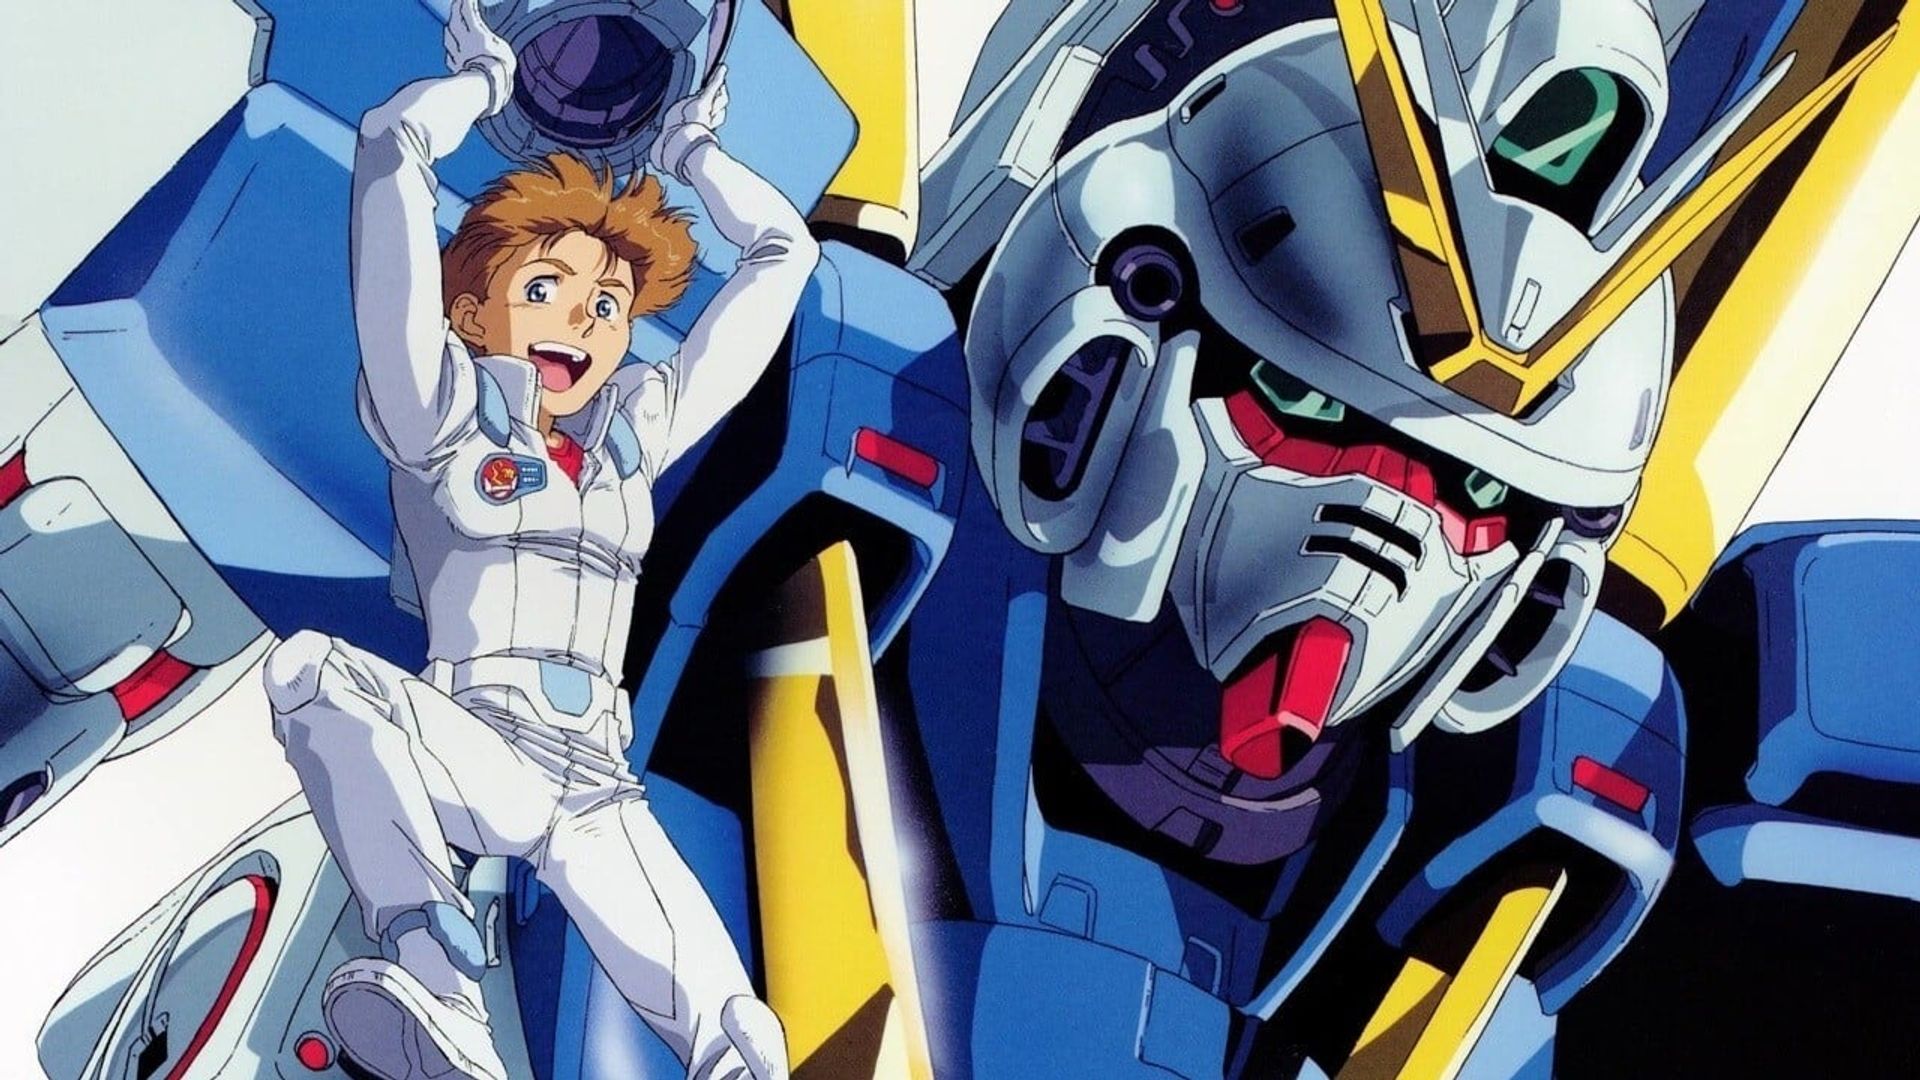 Mobile Suit V Gundam background